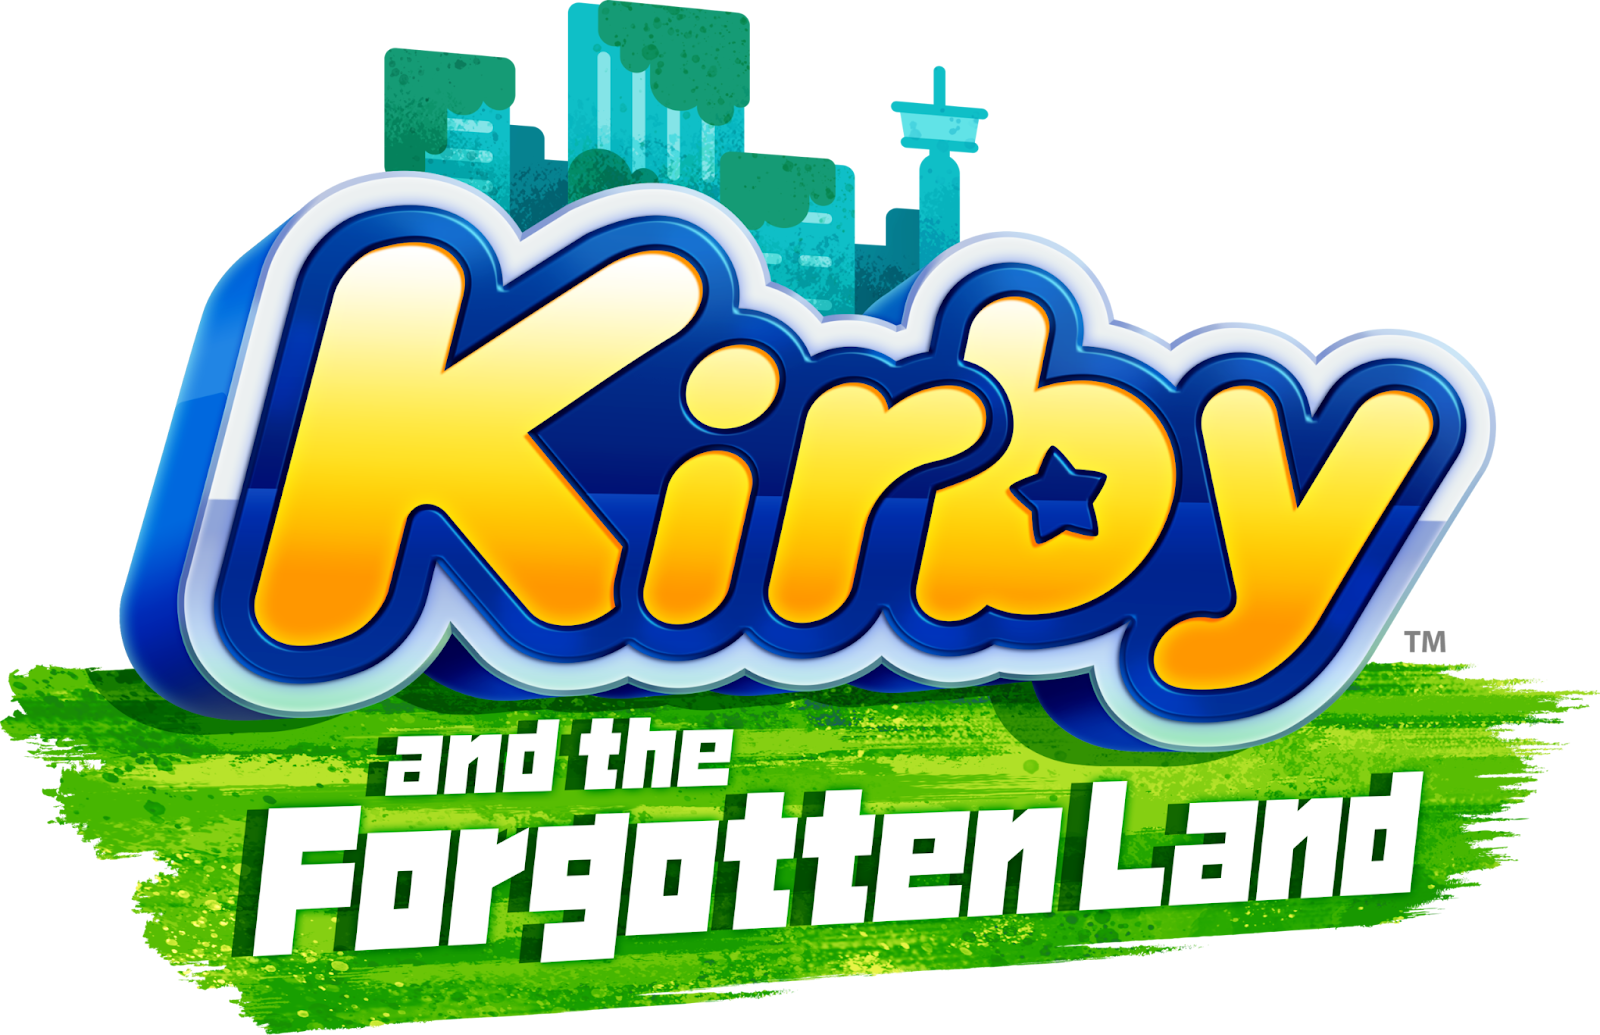 Get Free Bonus With Kirby's Return To Dream Land At Walmart - GameSpot